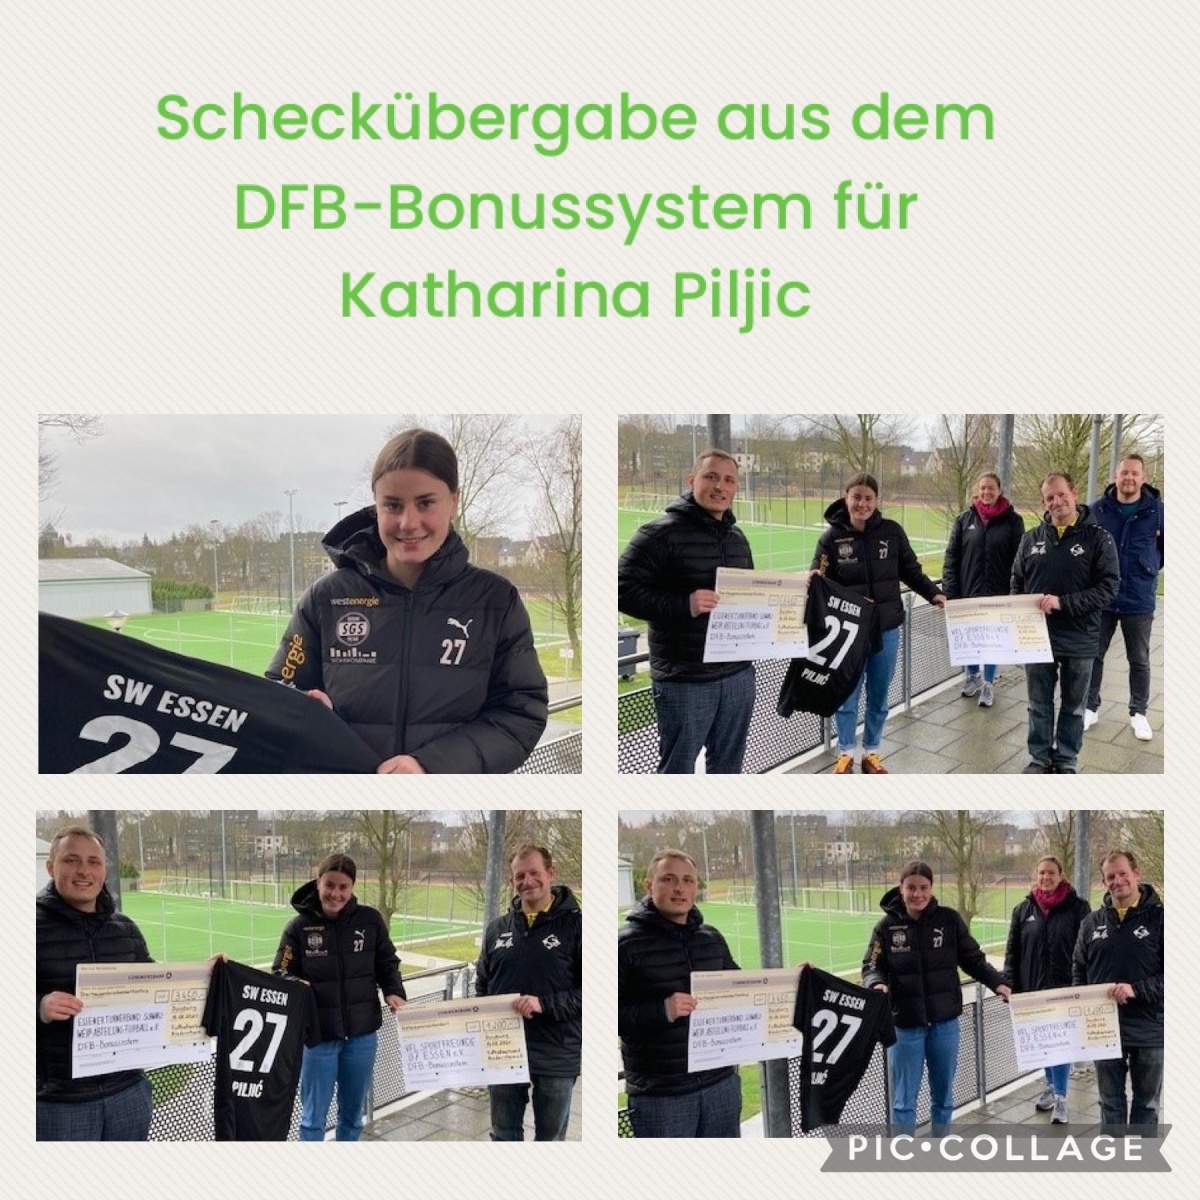 Scheckübergabe aus dem DFB-Bonussystem für Katharina Piljic